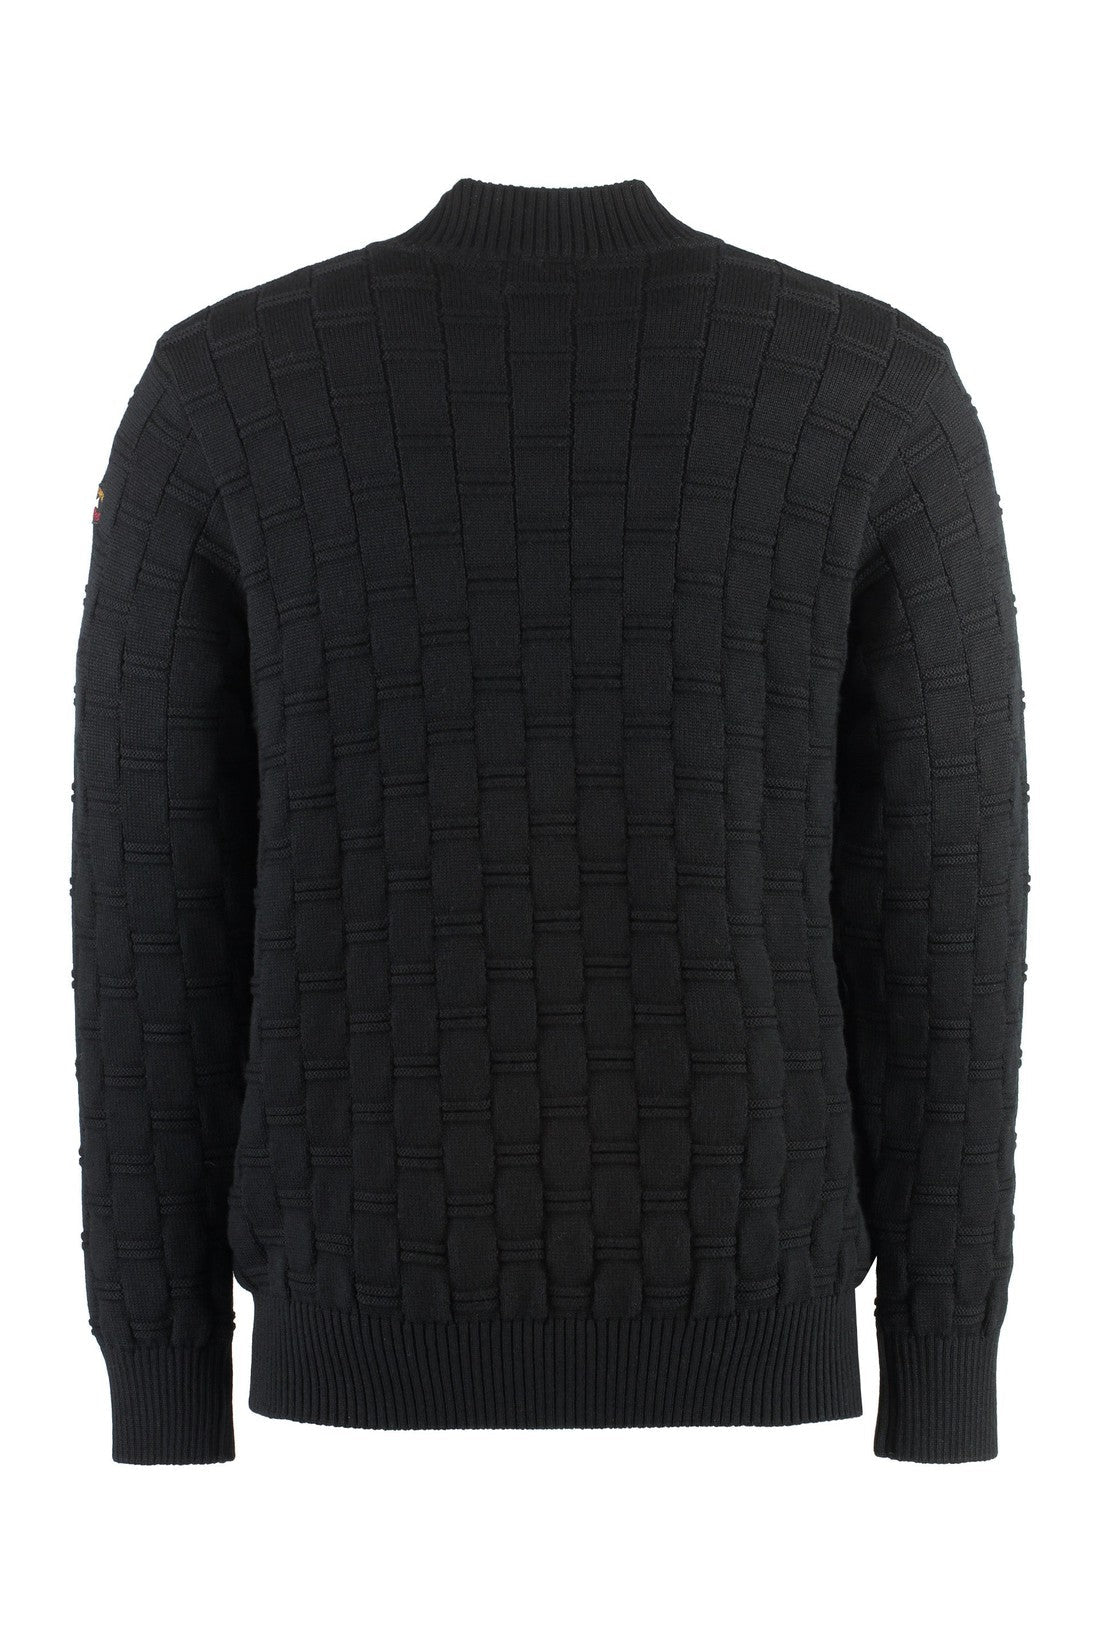 Piralo-OUTLET-SALE-Virgin wool crew-neck sweater-ARCHIVIST